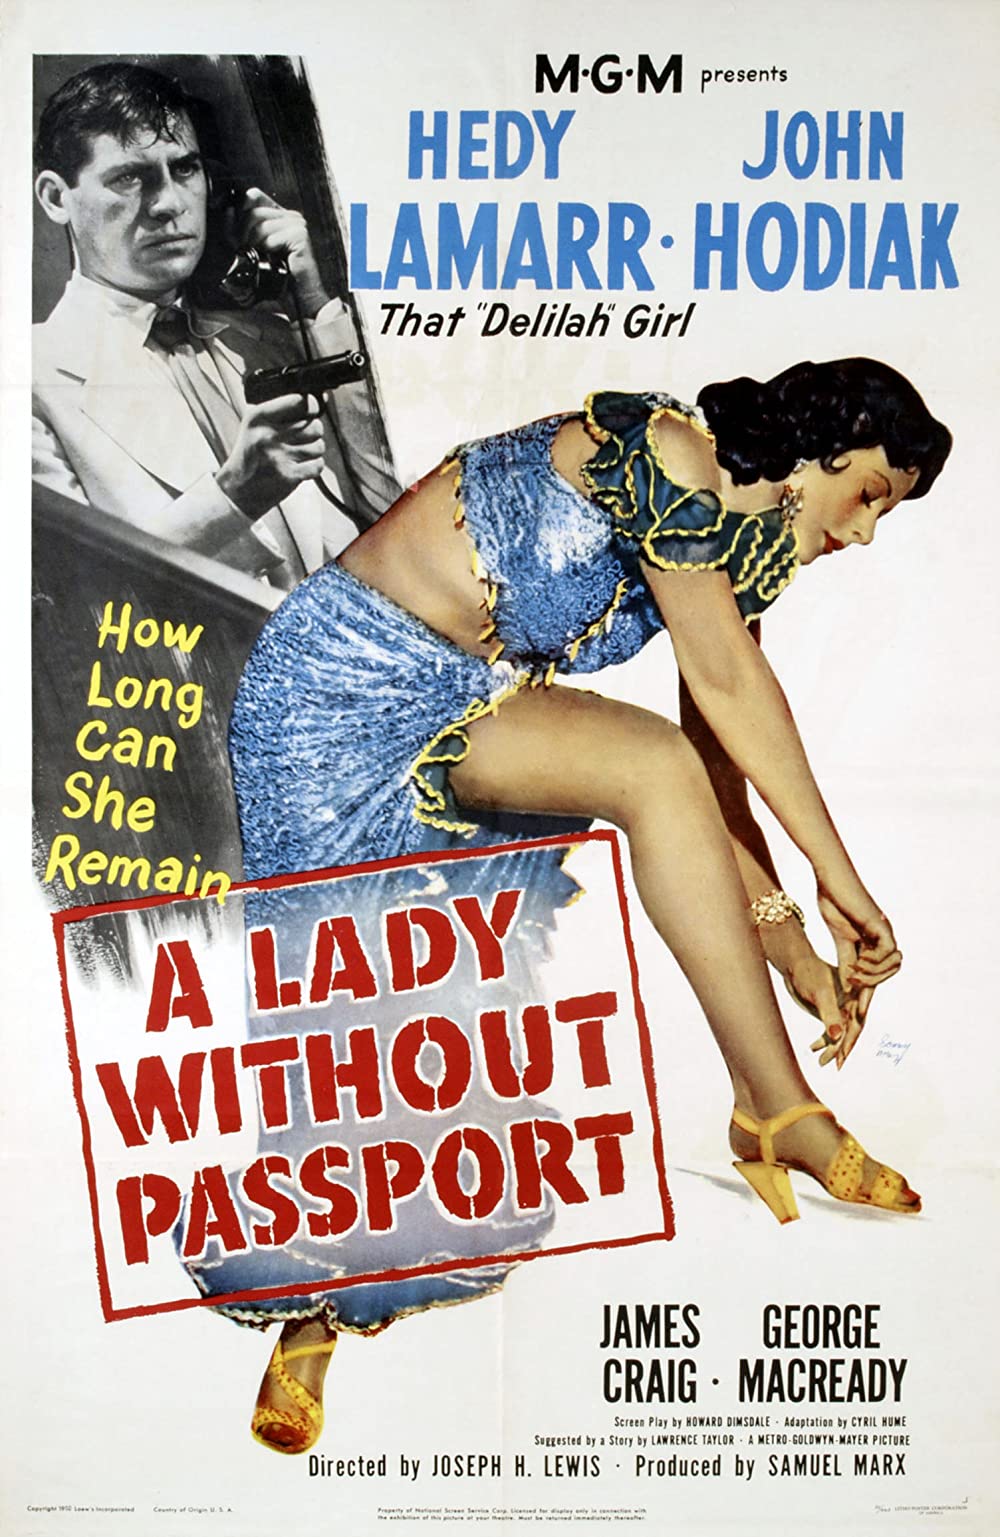 Filmbeschreibung zu A Lady Without Passport (OV)